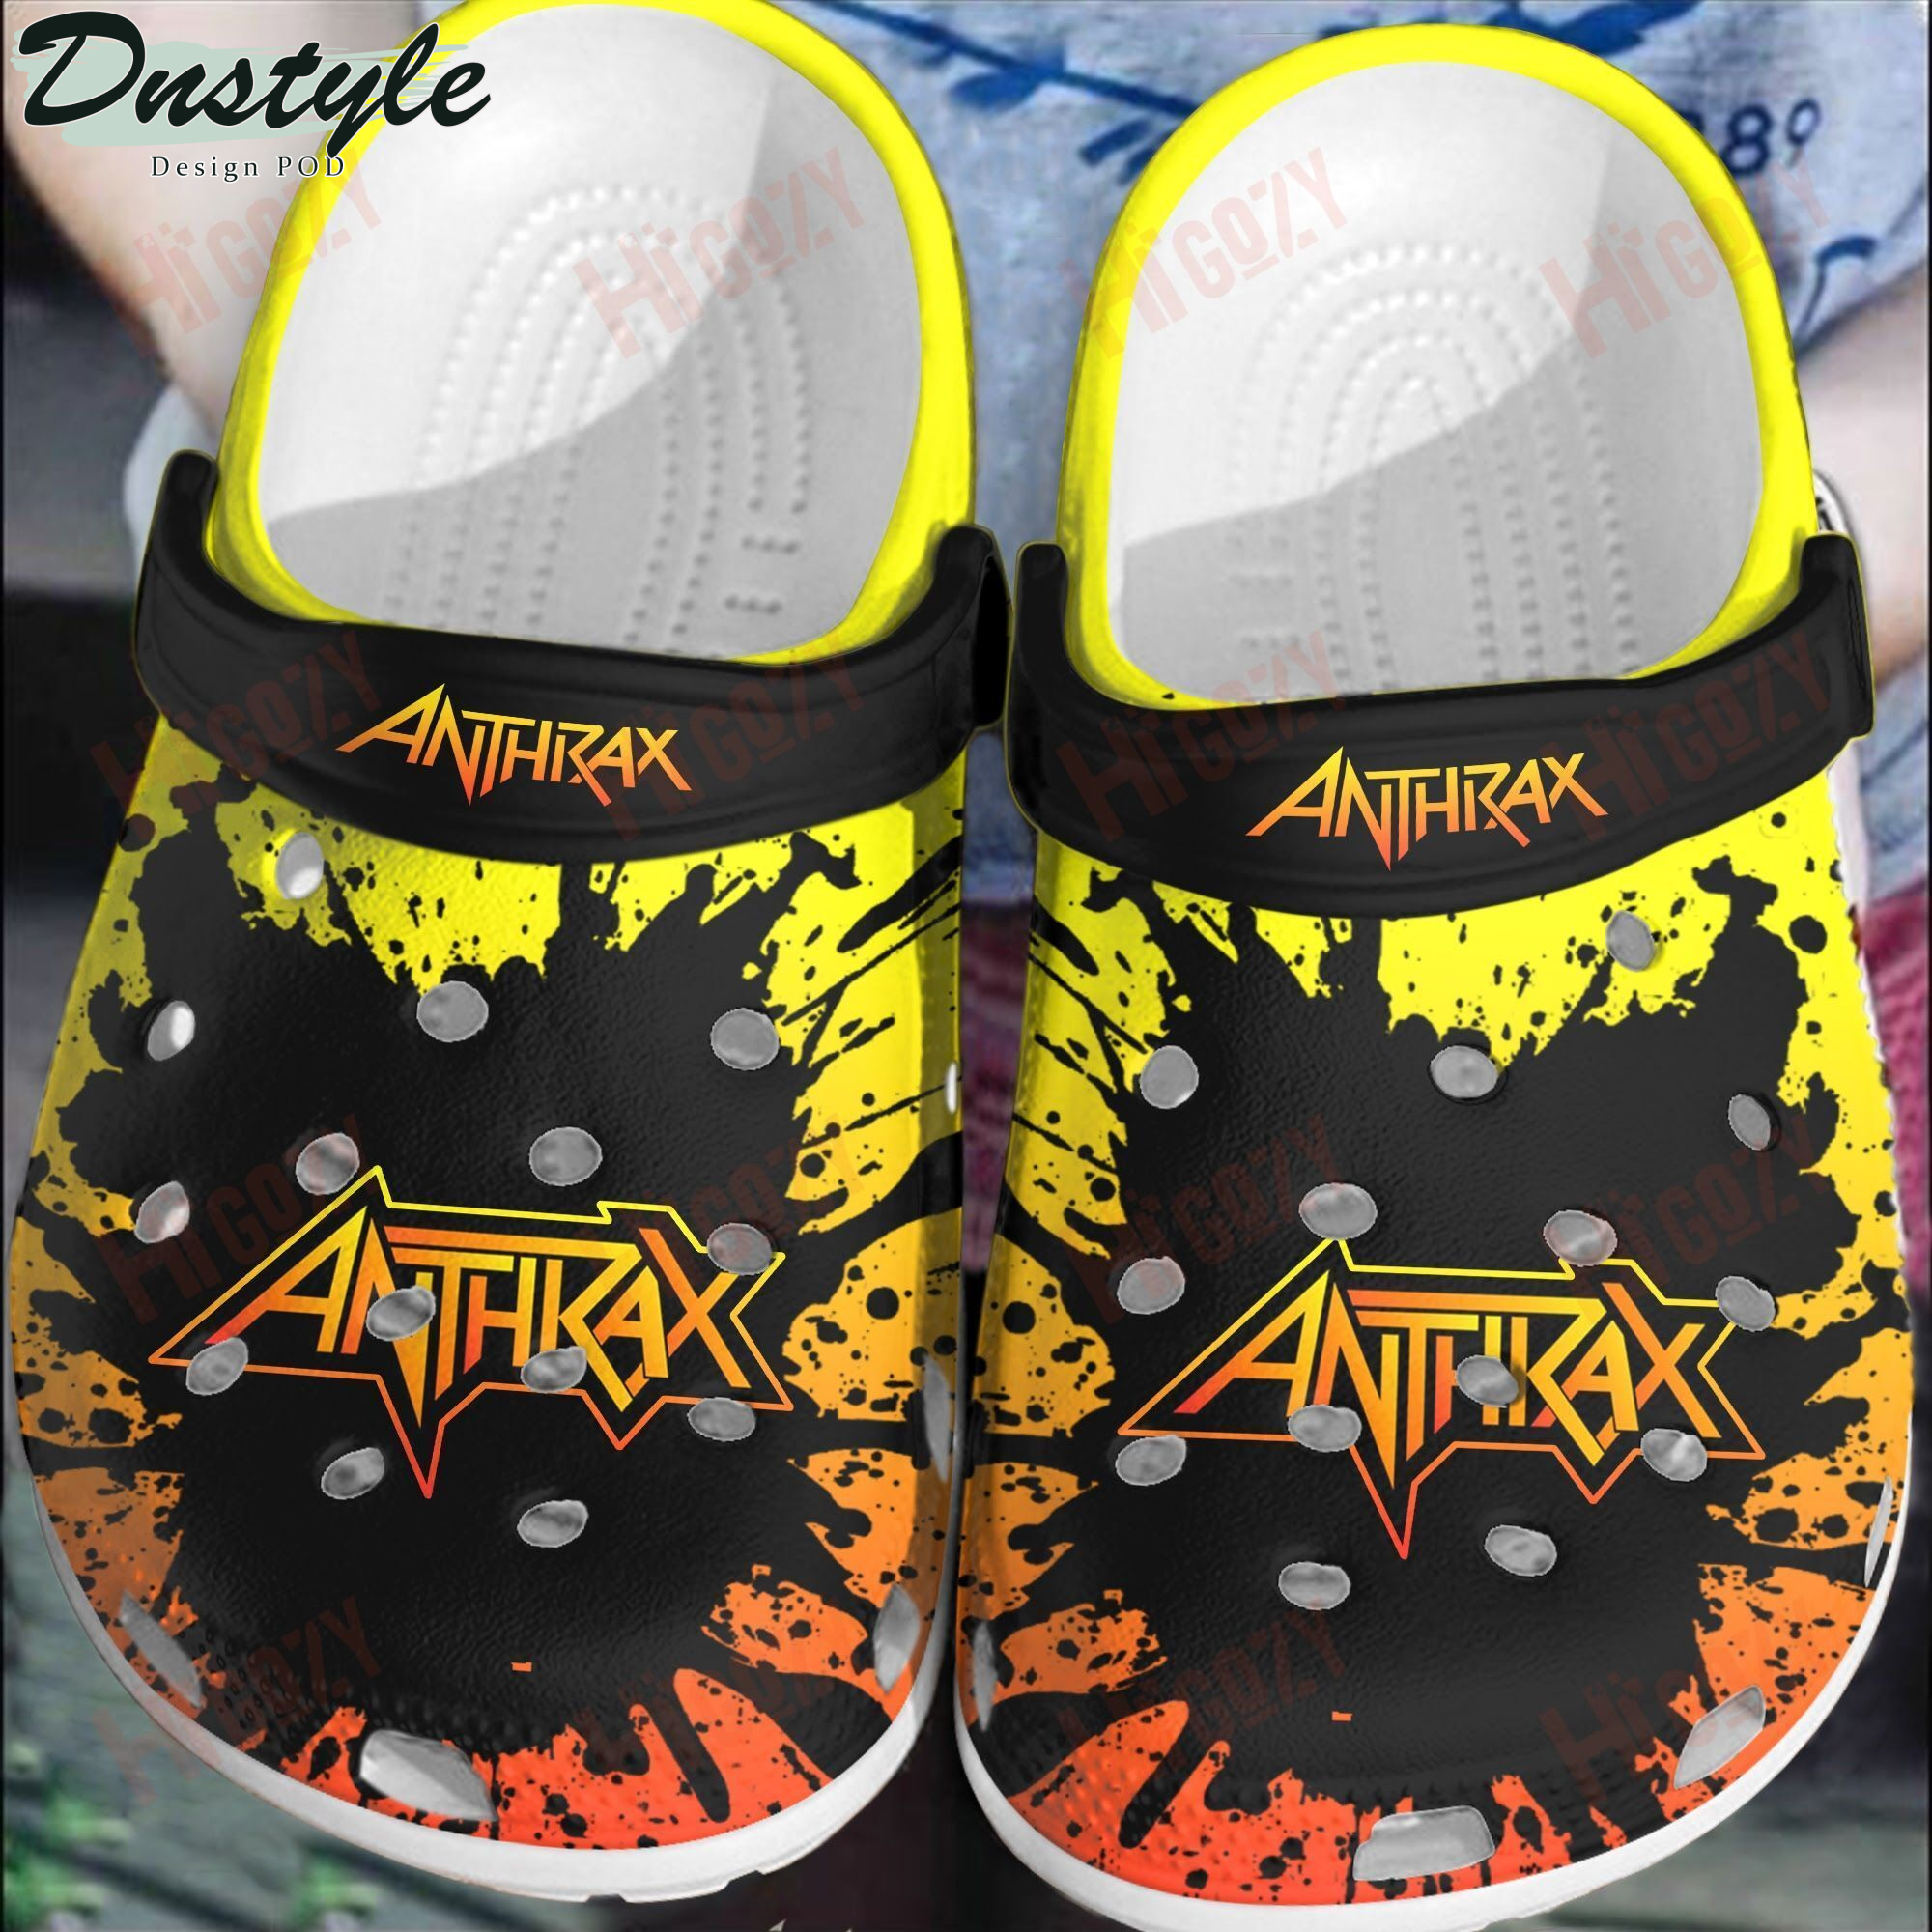 Anthrax Band Tie Dye Crocs Crocband Clog